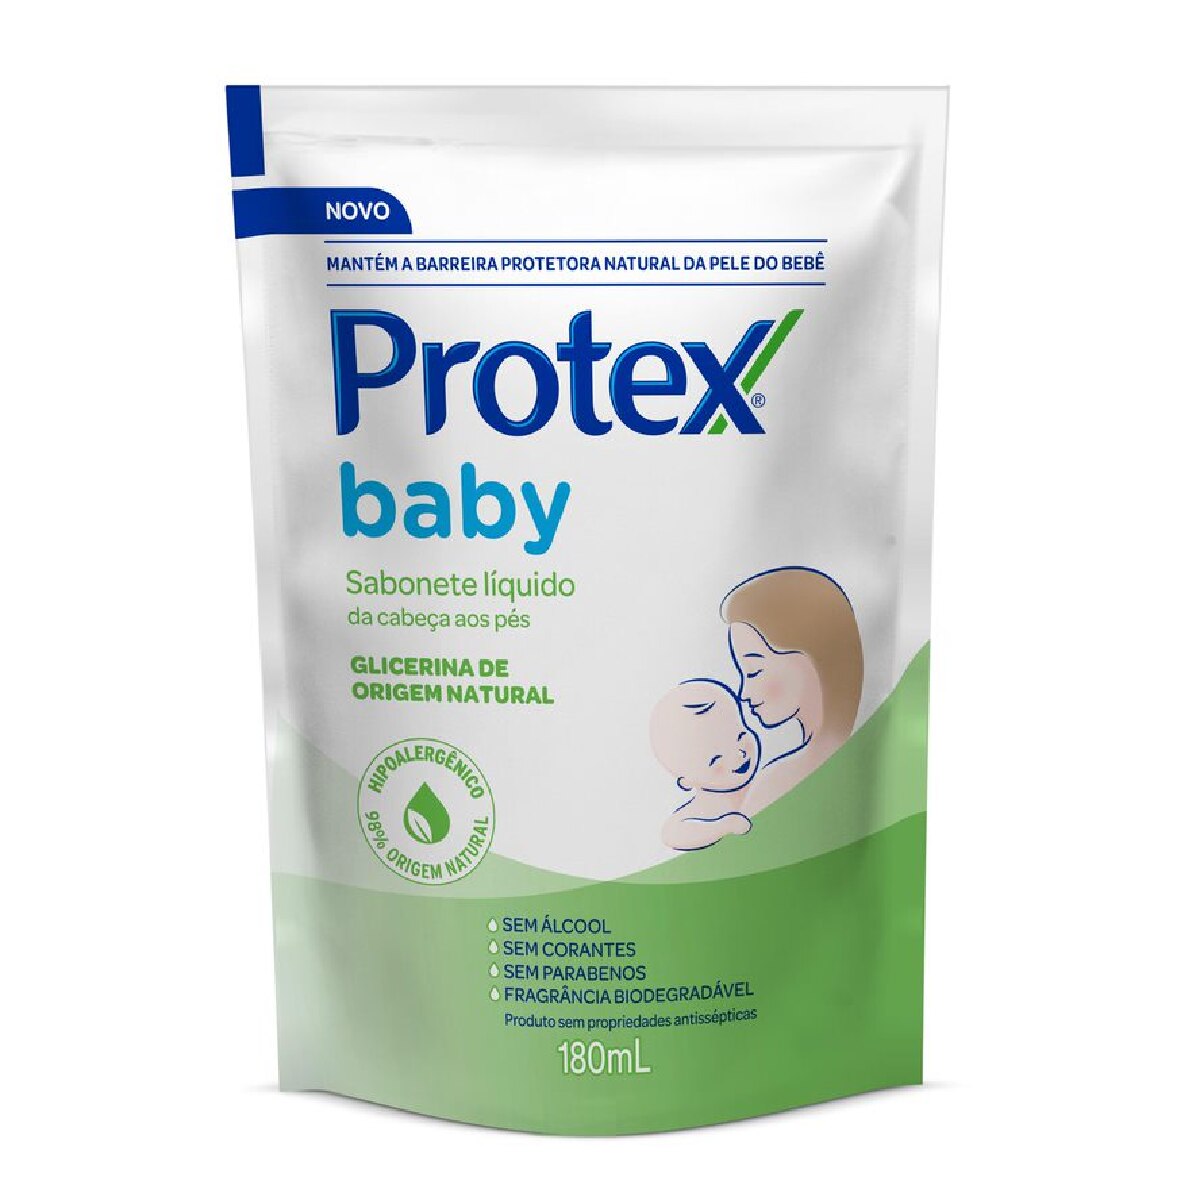 Sabonete Liquido Protex Baby Glicerina Natural Refil 180ml